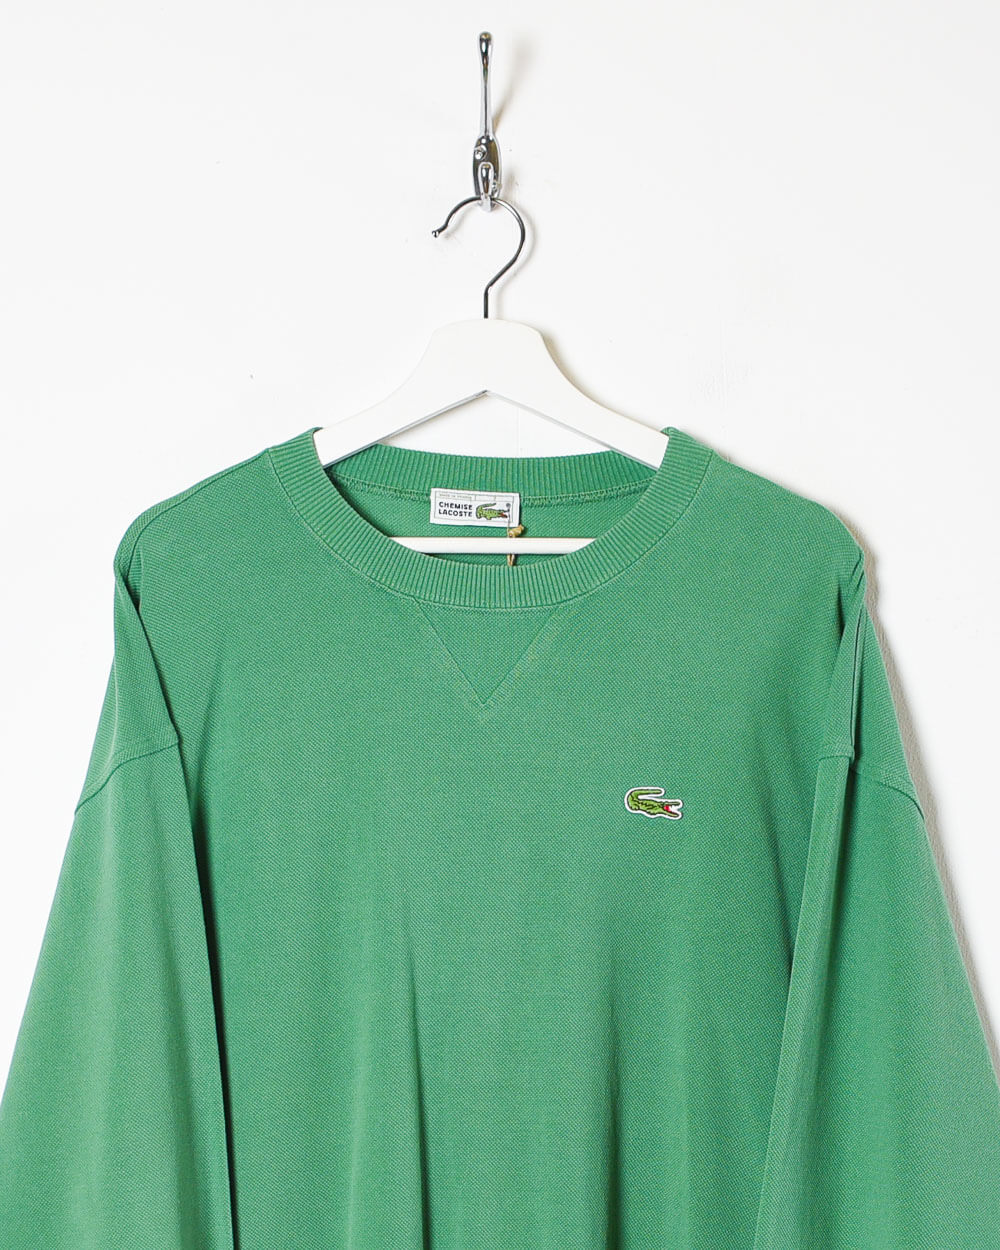 Green Chemise Lacoste Sweatshirt - X-Large